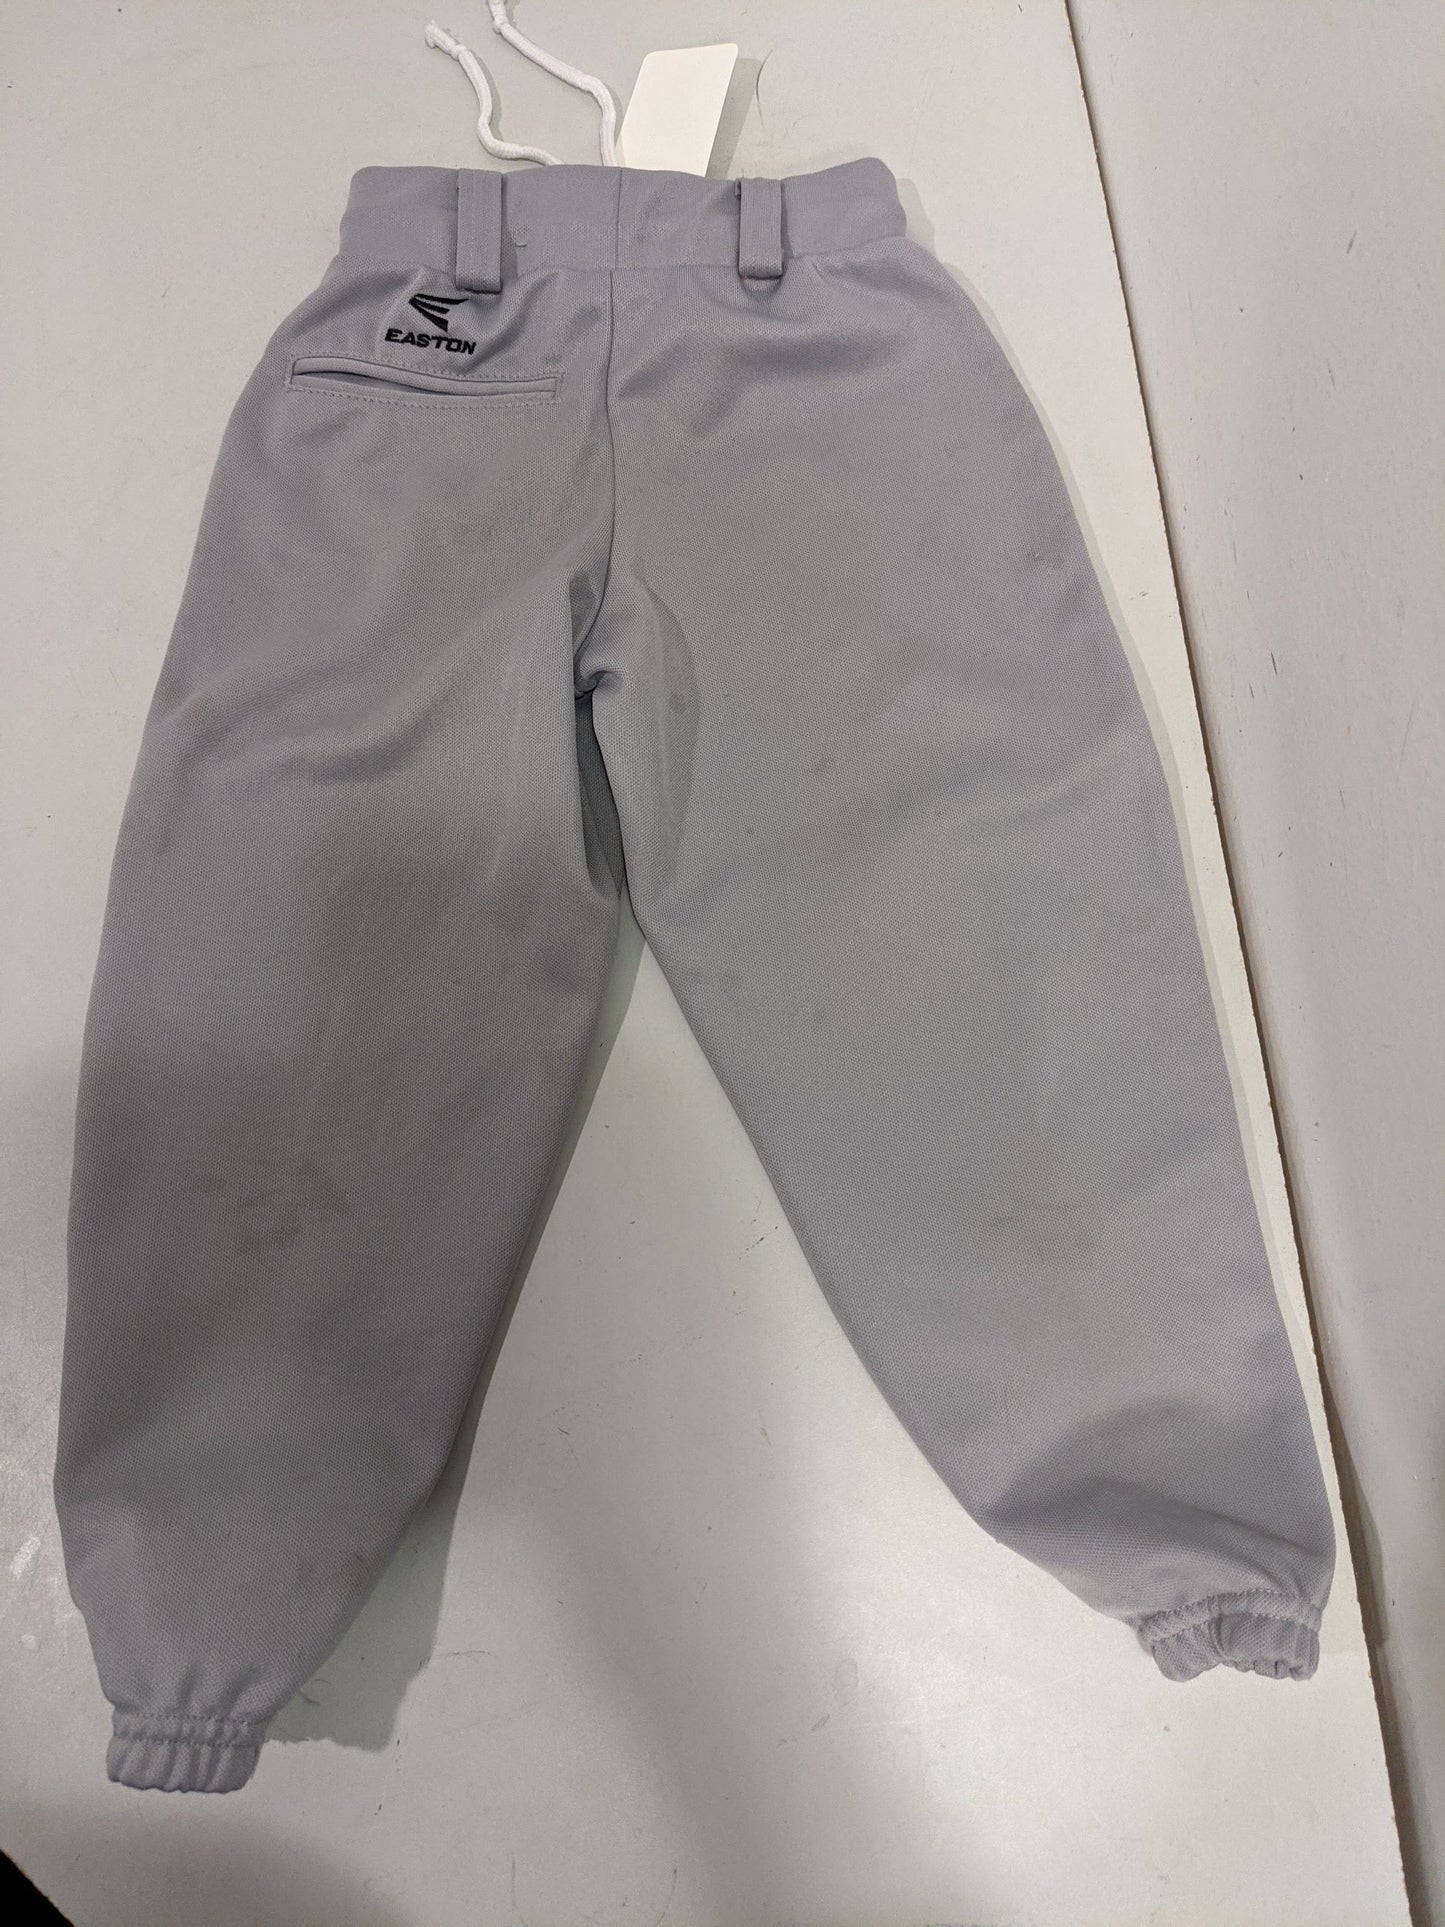 Easton Youth Baseball Pants Size Youth 2XS Gray Used